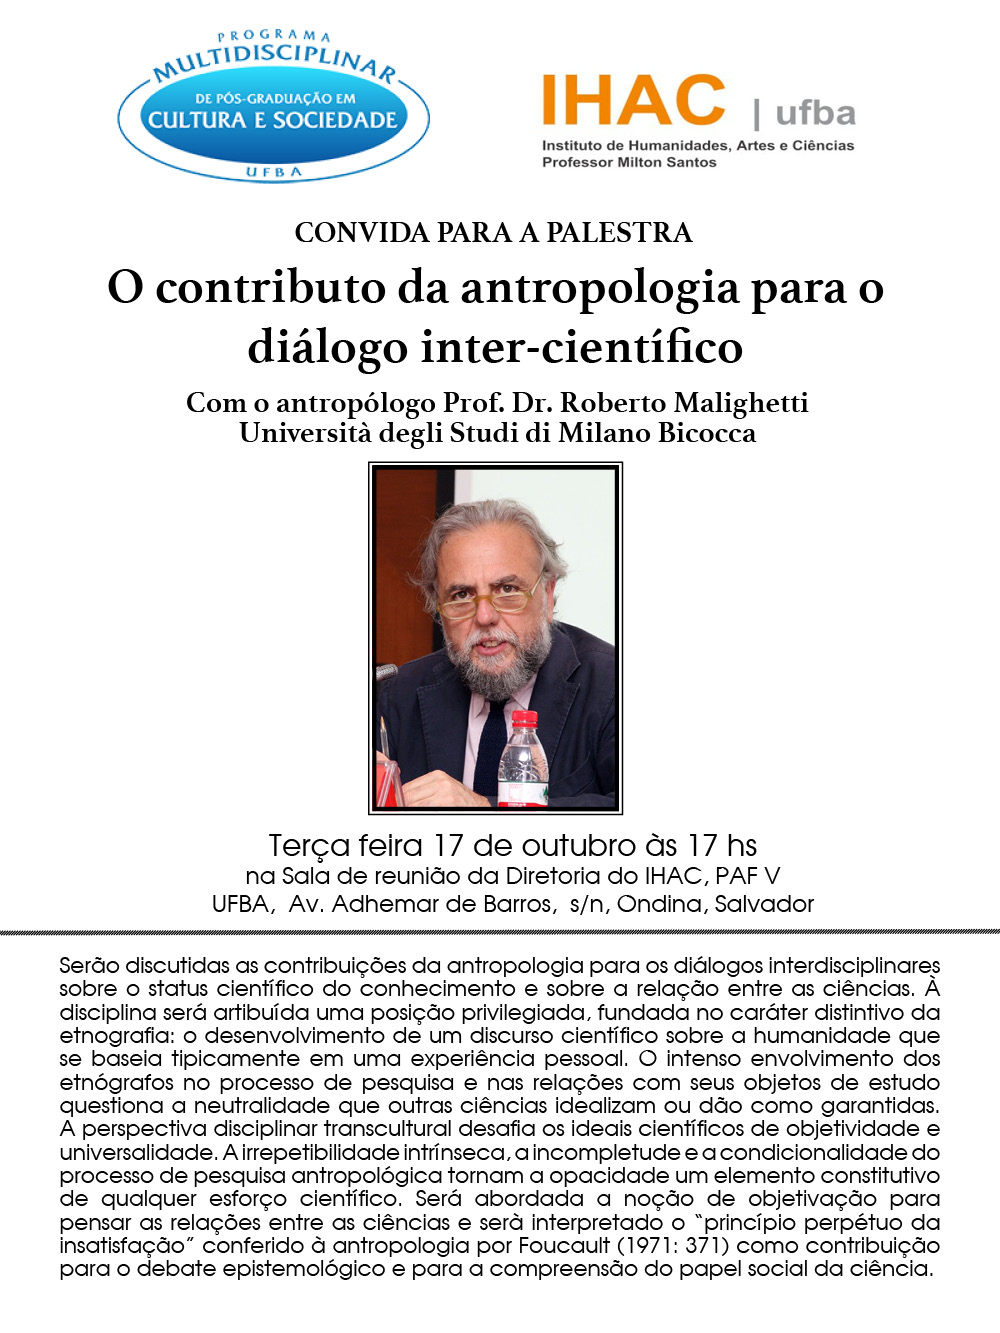 Pós-Cultura promove palestra sobre o contributo da antropologia para o diálogo inter-científico